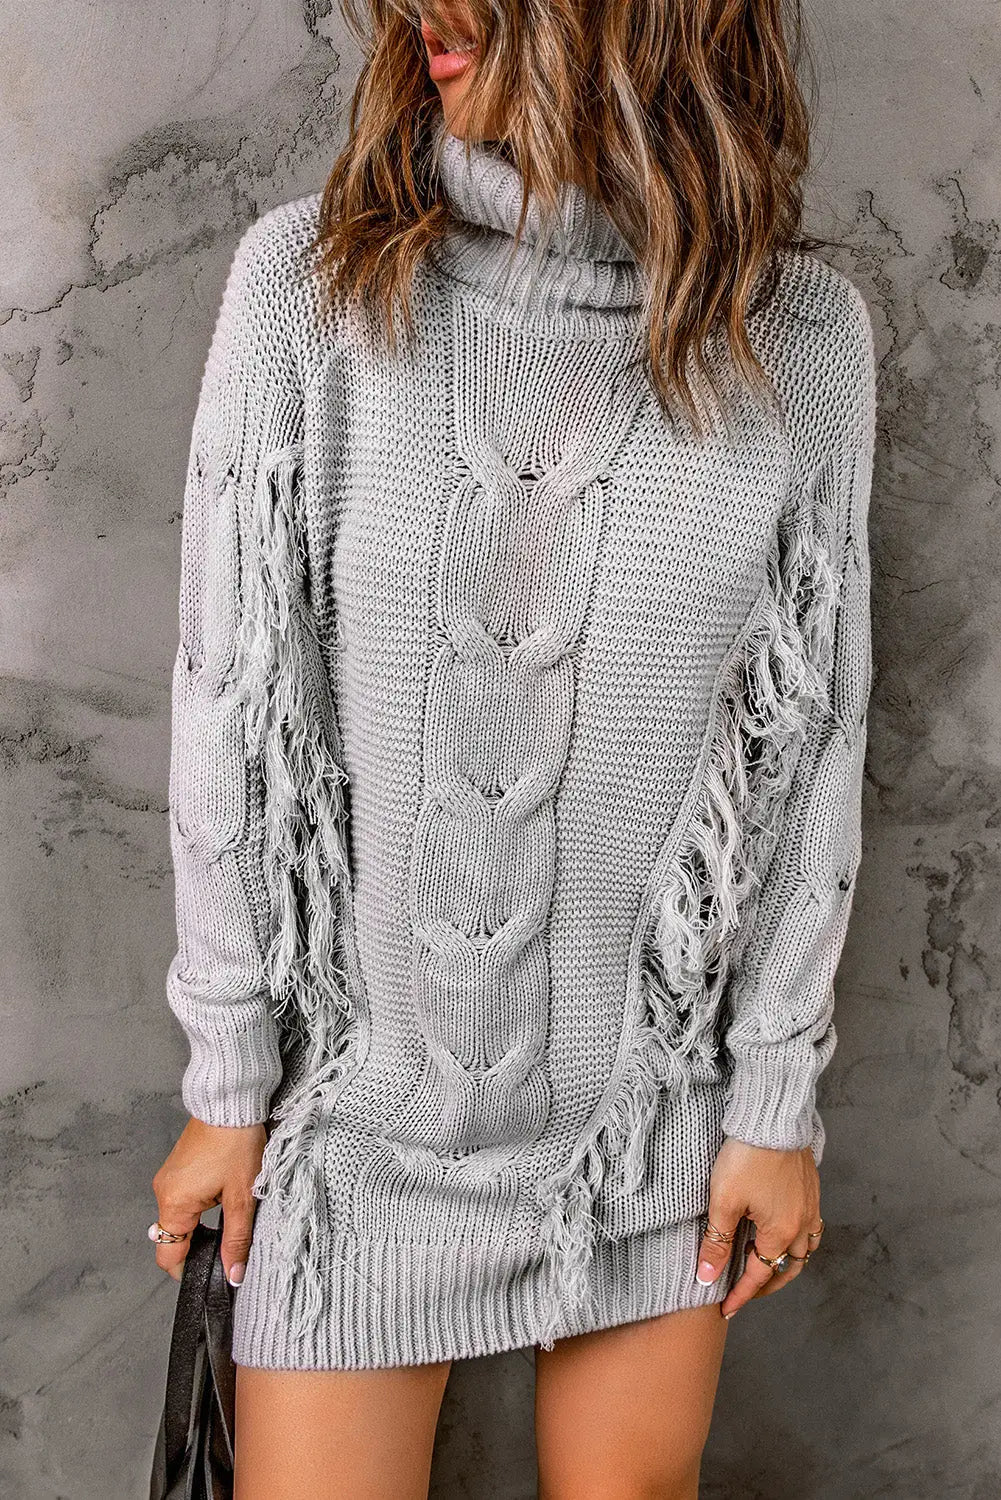 Gray twist fringe casual high neck sweater dress - s /